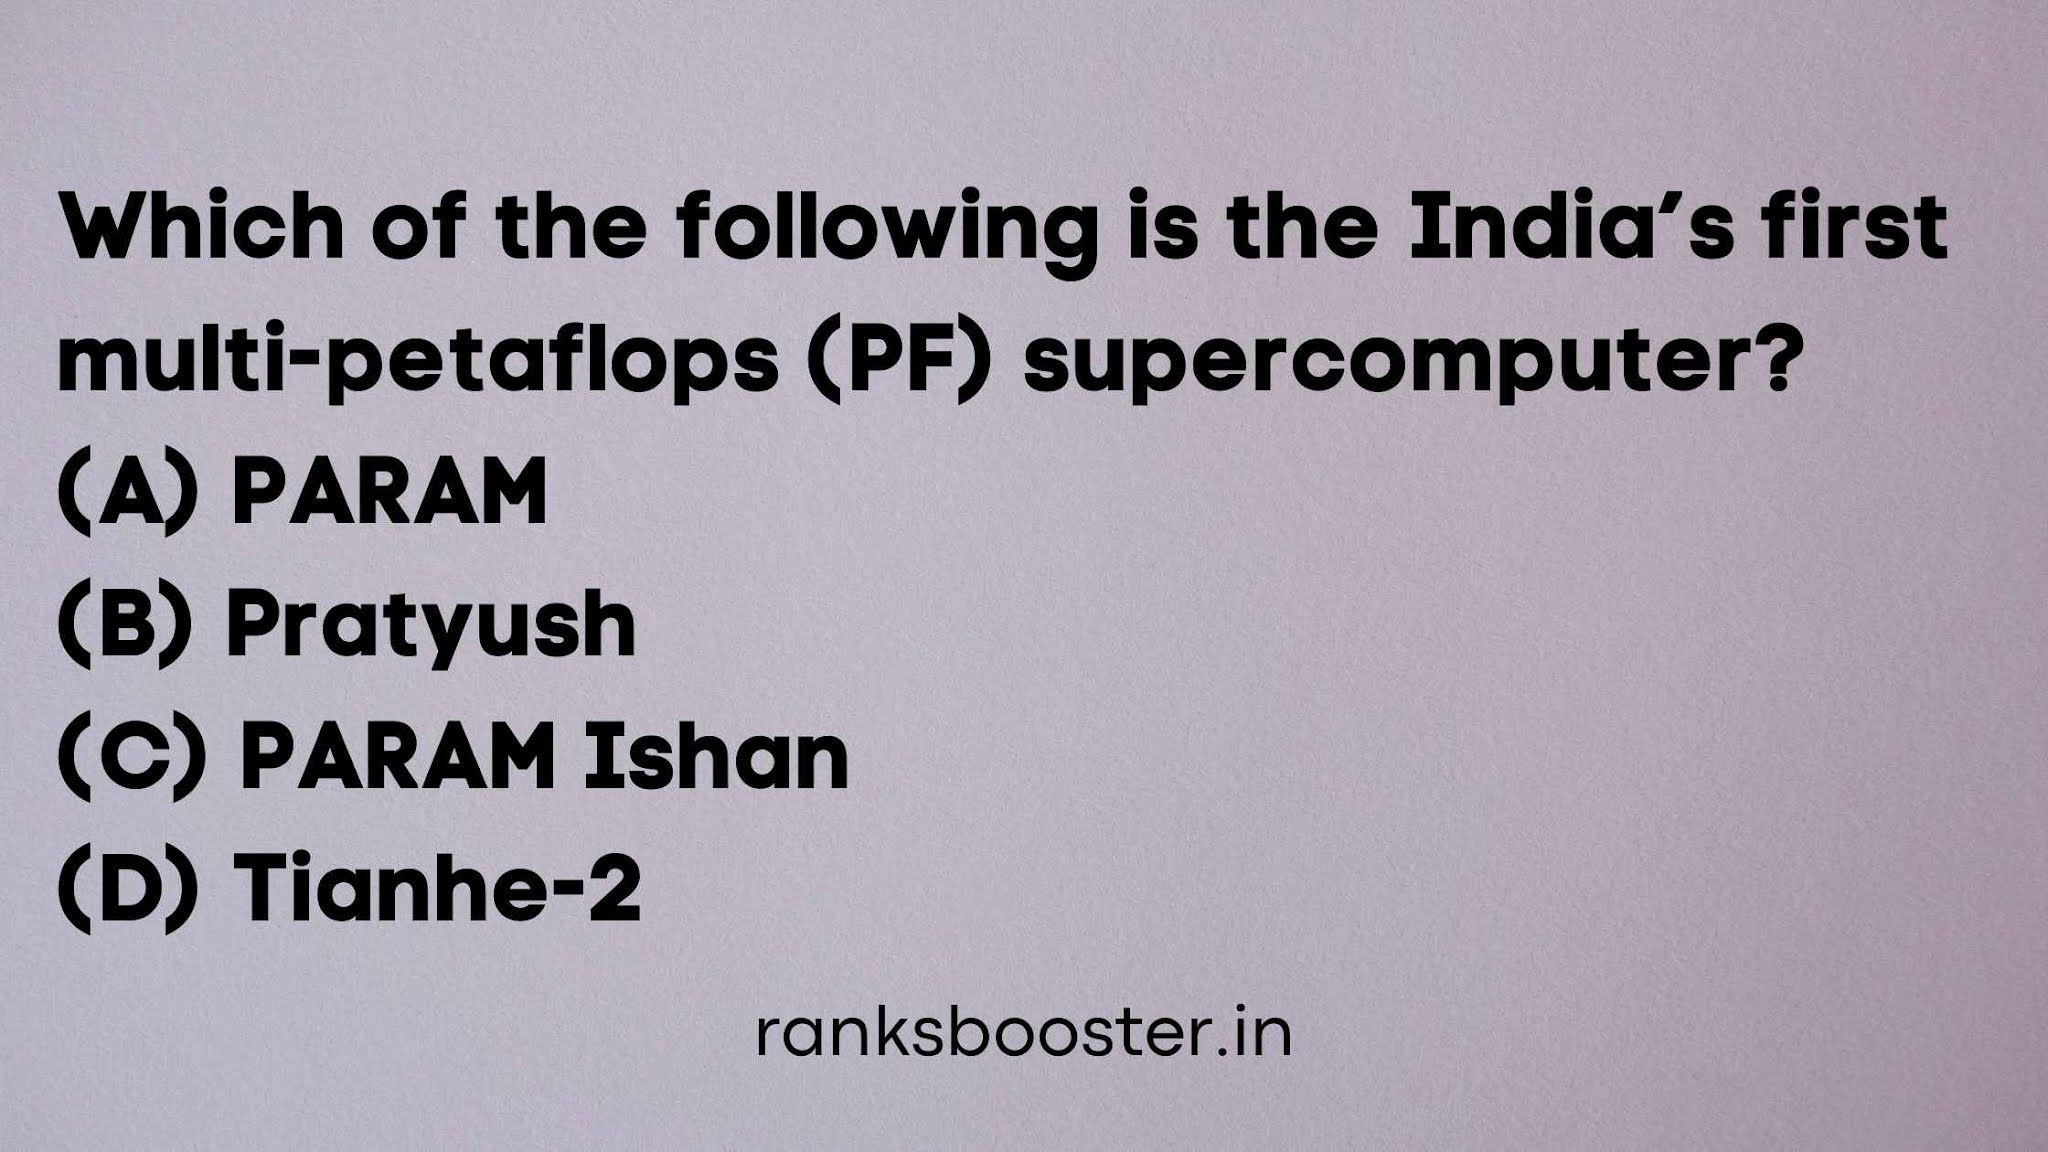 Which of the following is the India’s first multi-petaflops (PF) supercomputer? (A) PARAM (B) Pratyush (C) PARAM Ishan (D) Tianhe-2